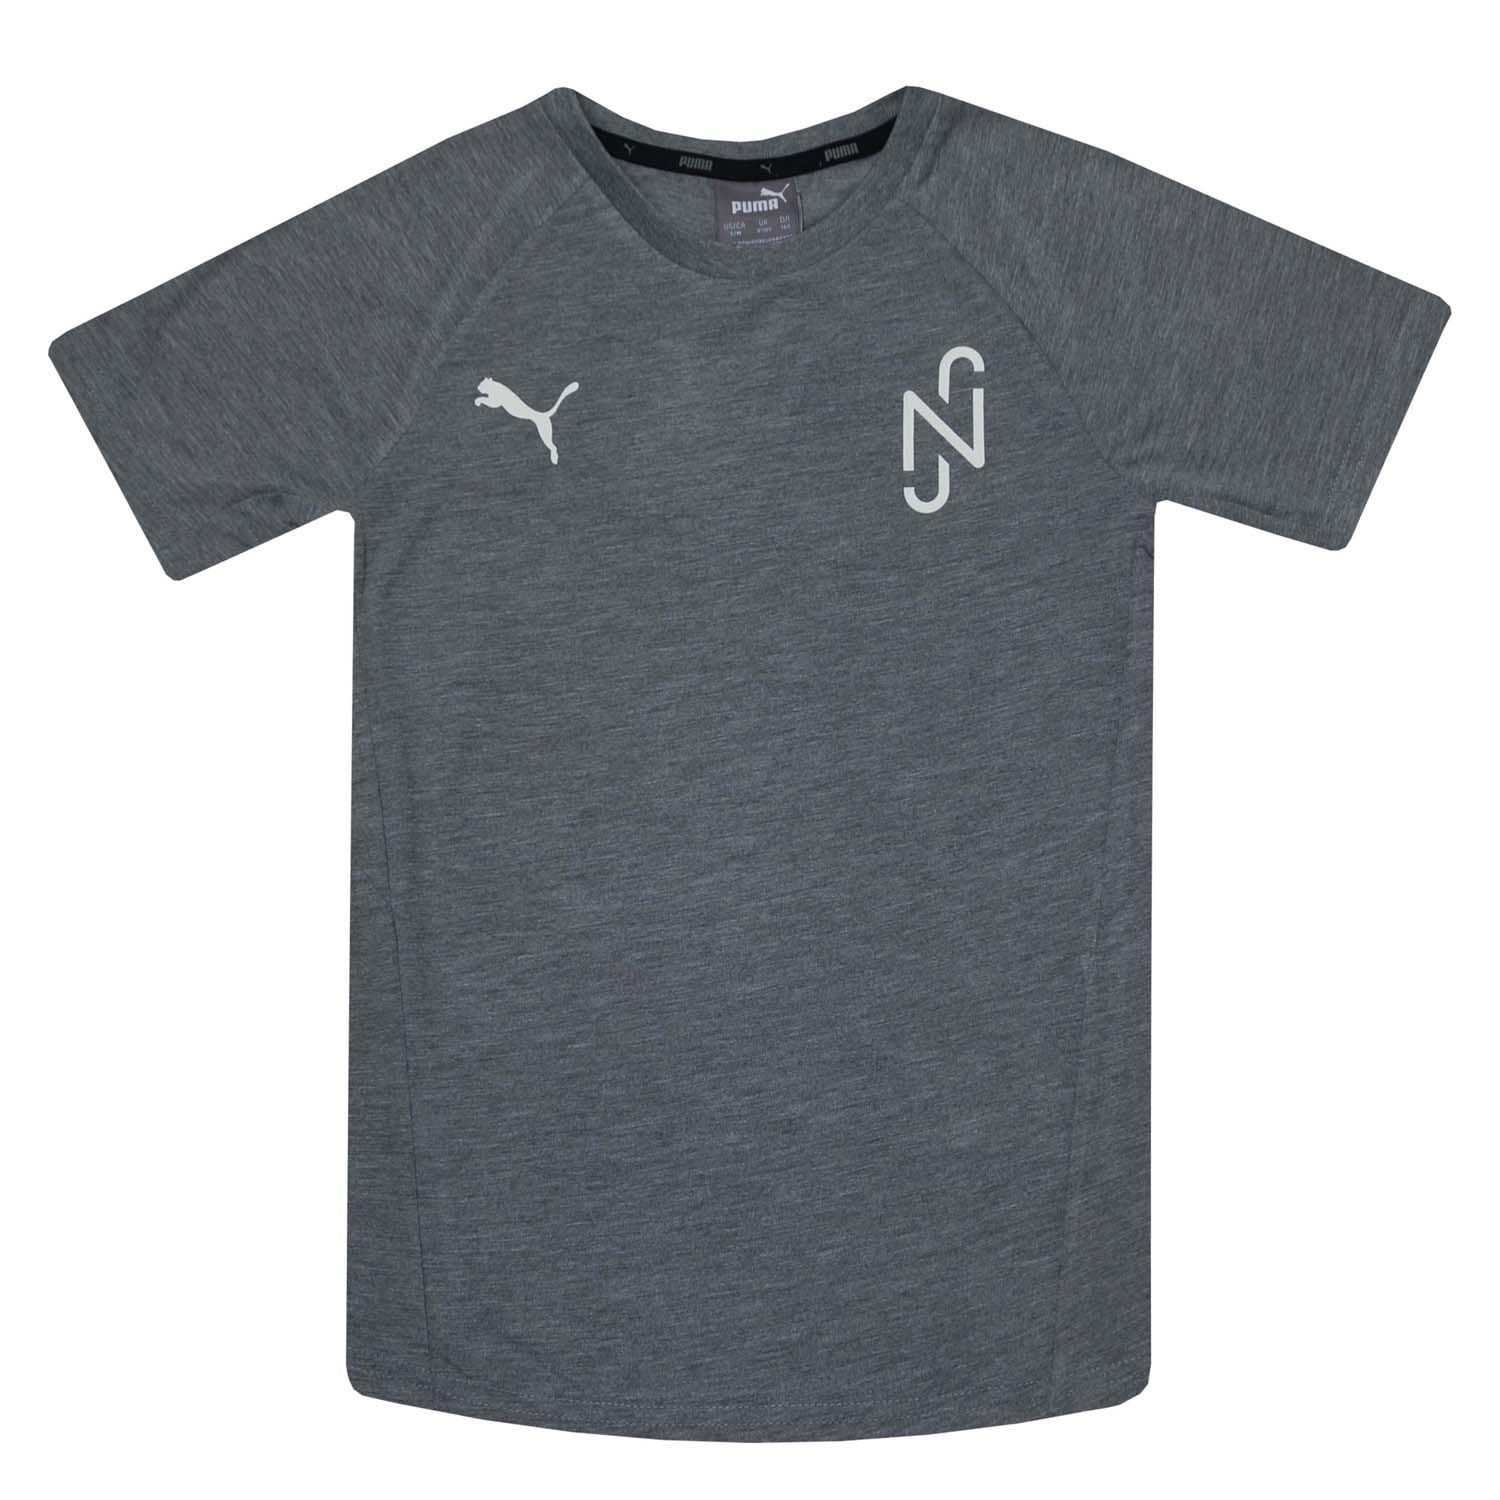 Junior Boys Puma Neymar Evostripe T- Shirt in grey.- Ribbed crew neck.- Short raglan sleeves.- Logo across chest.- Slim fit.- Shell: 65% Polyester  35% Viscose.- Ref: 60563005E